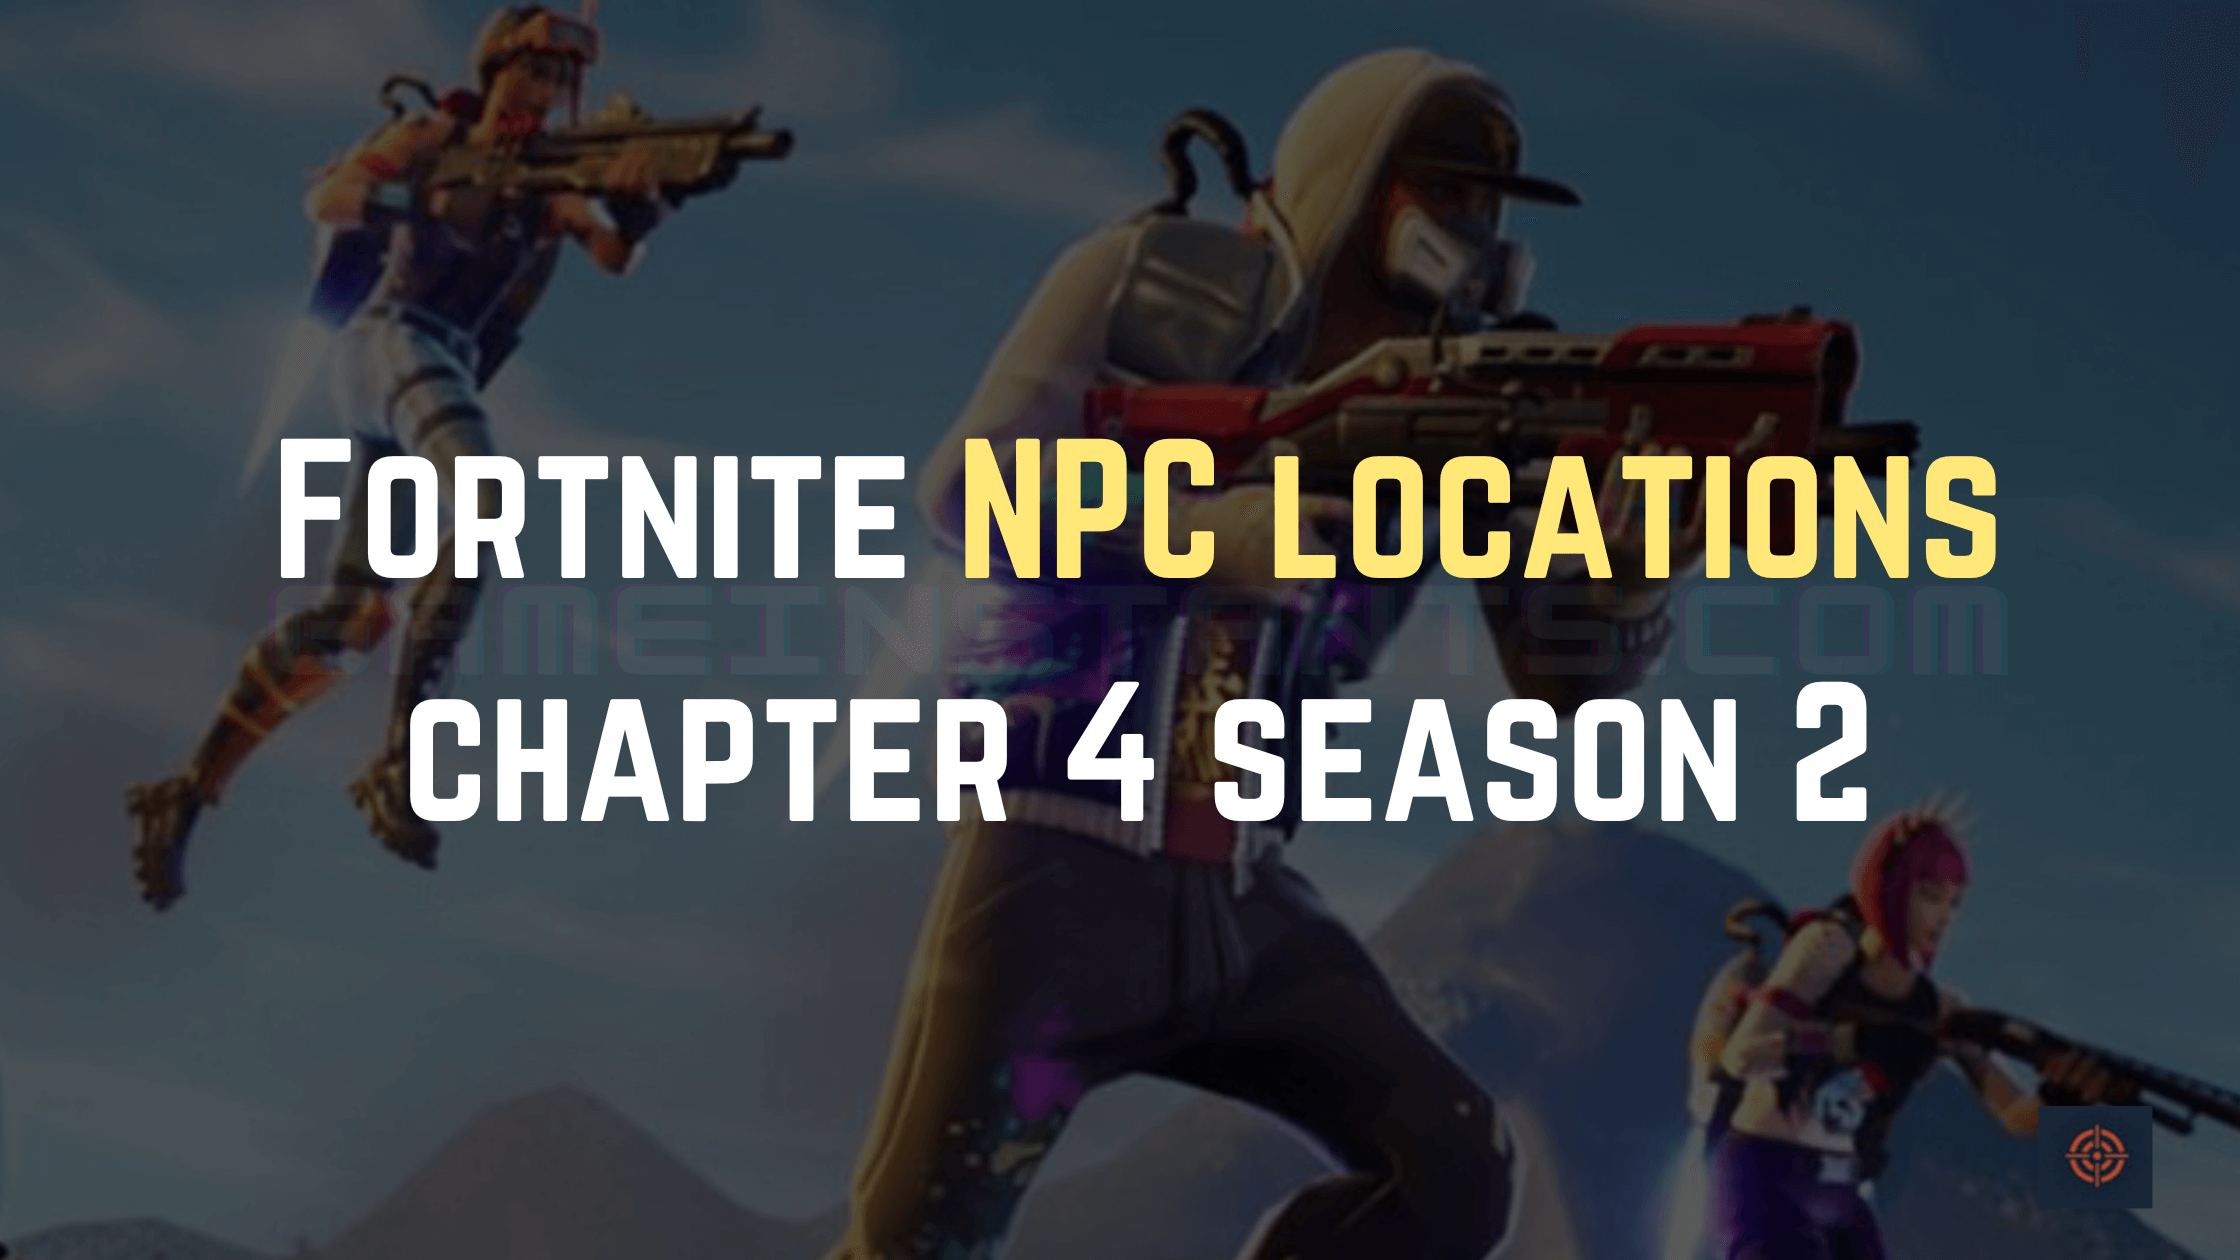 chapter 4 season 2 fortnite npc locations